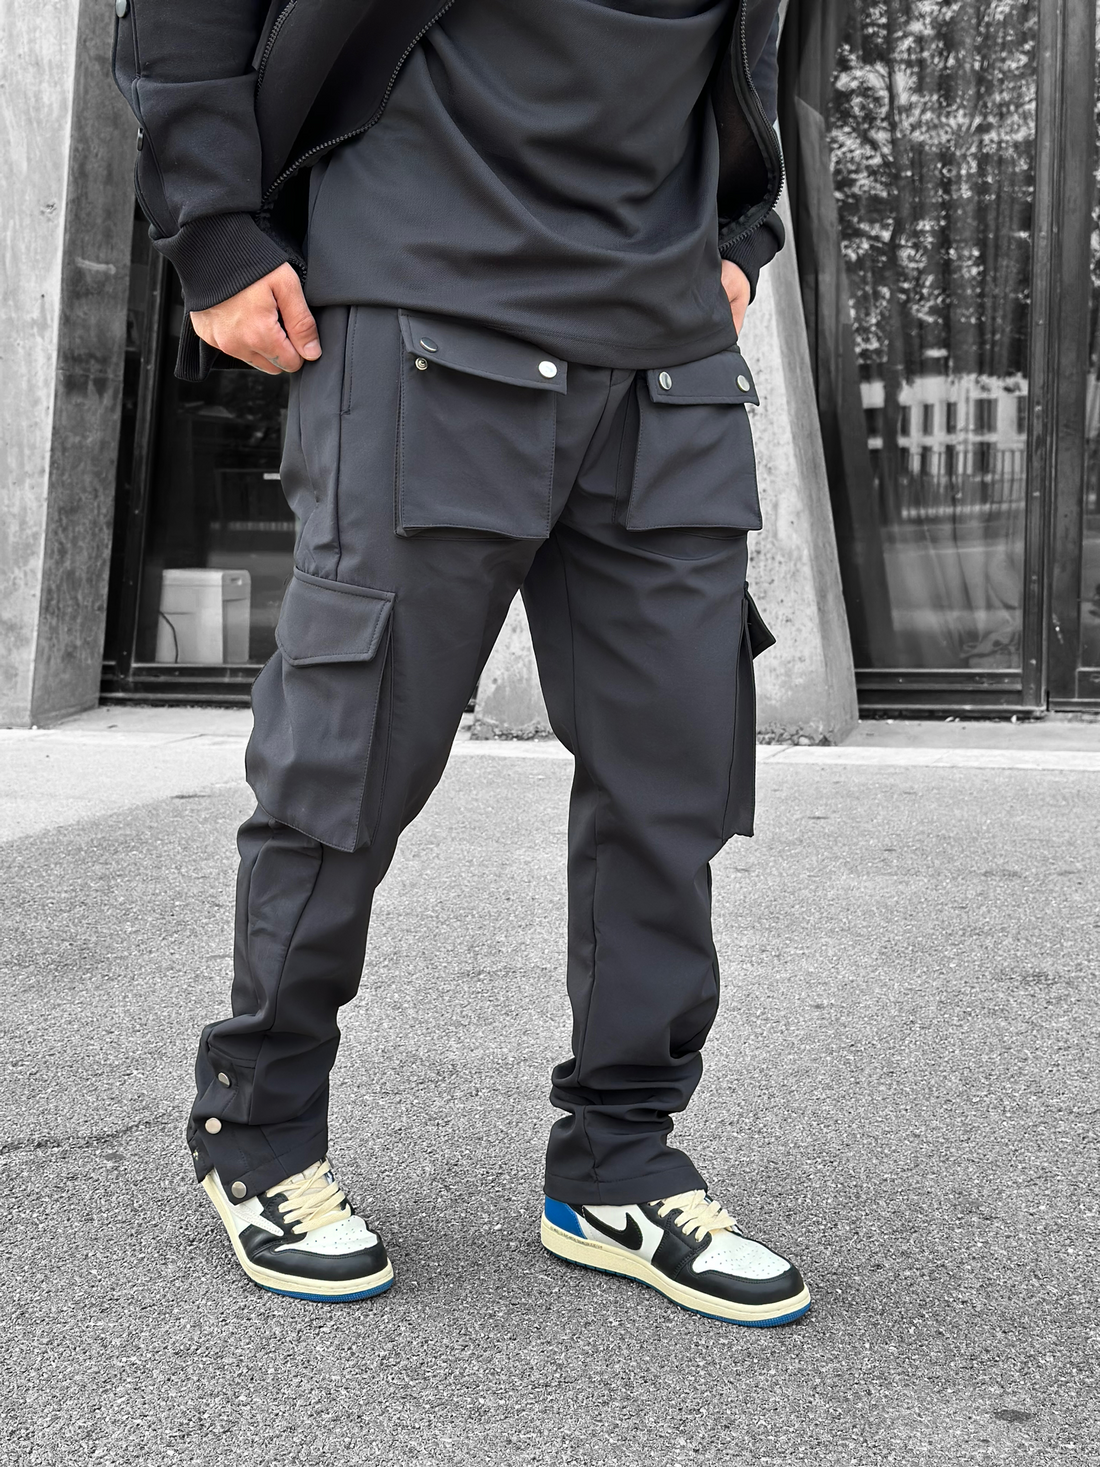 Pantalon Chino Homme Slim, Noir Training Coton Cargo Noir Long